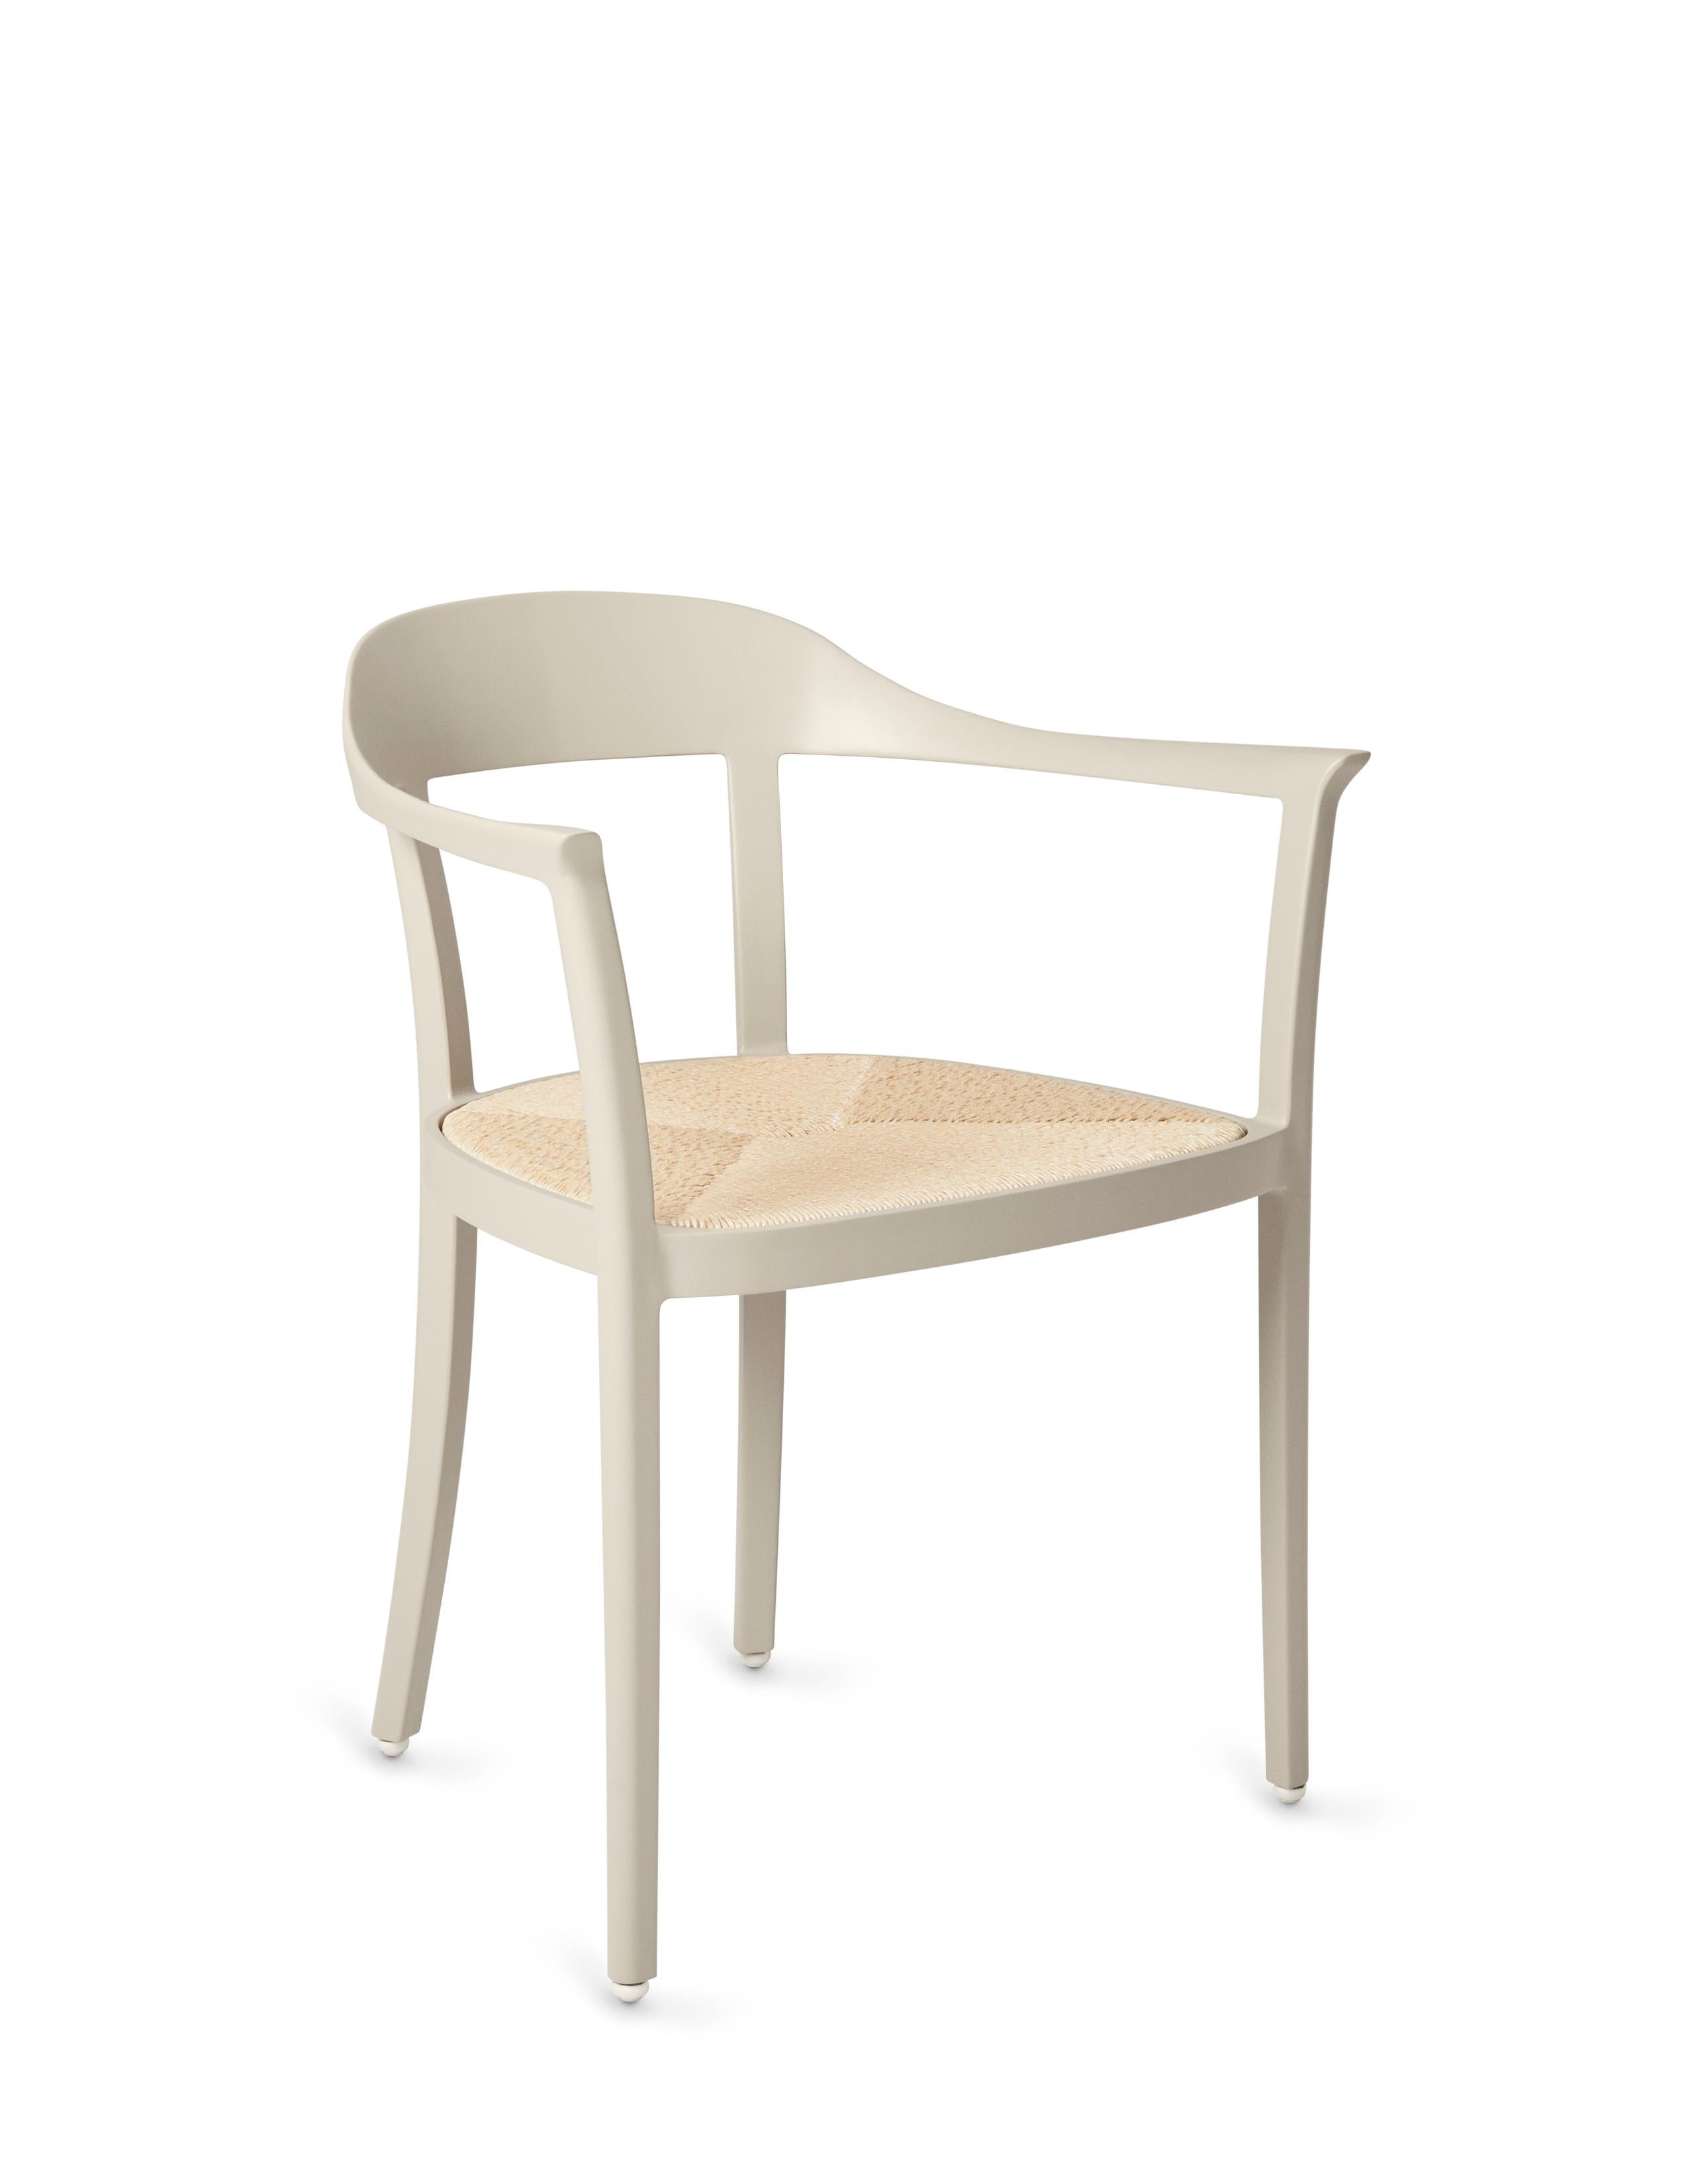 Aluminum Chesapeake Dining Chair, Pale Grey, Neutral, Woven Rush Seat, Outdoor Garden